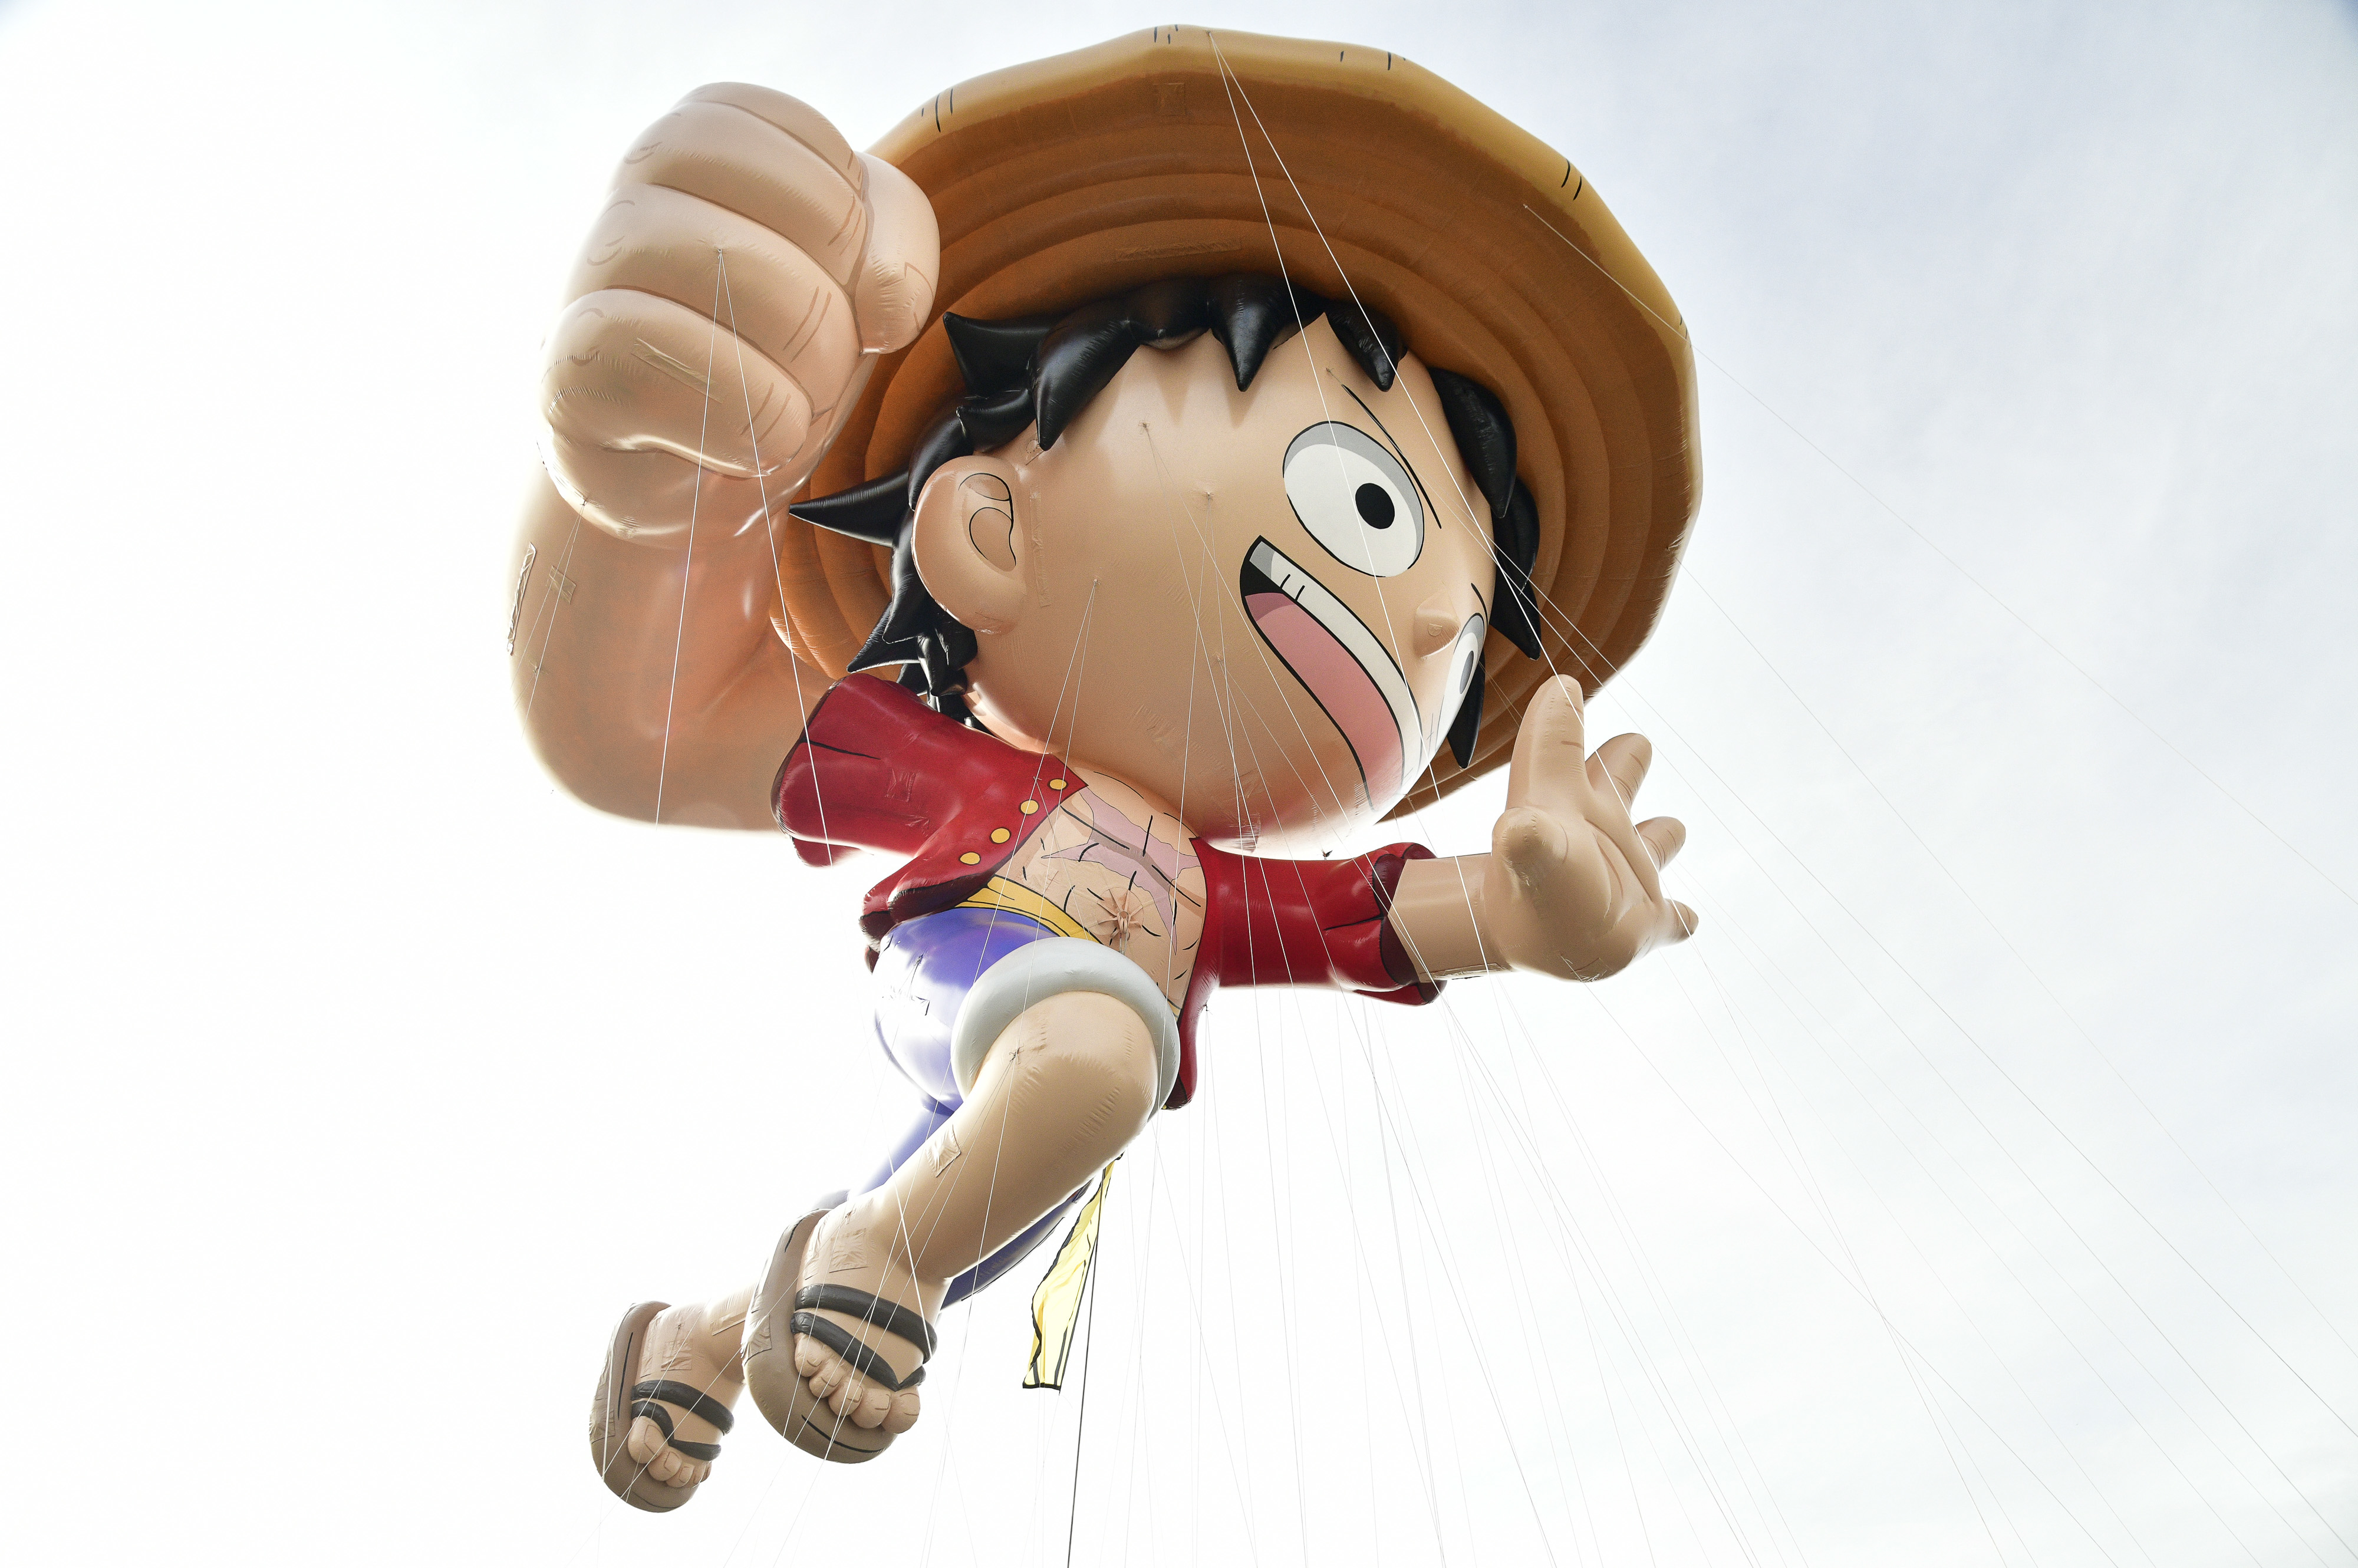 A Monkey D. Luffy balloon